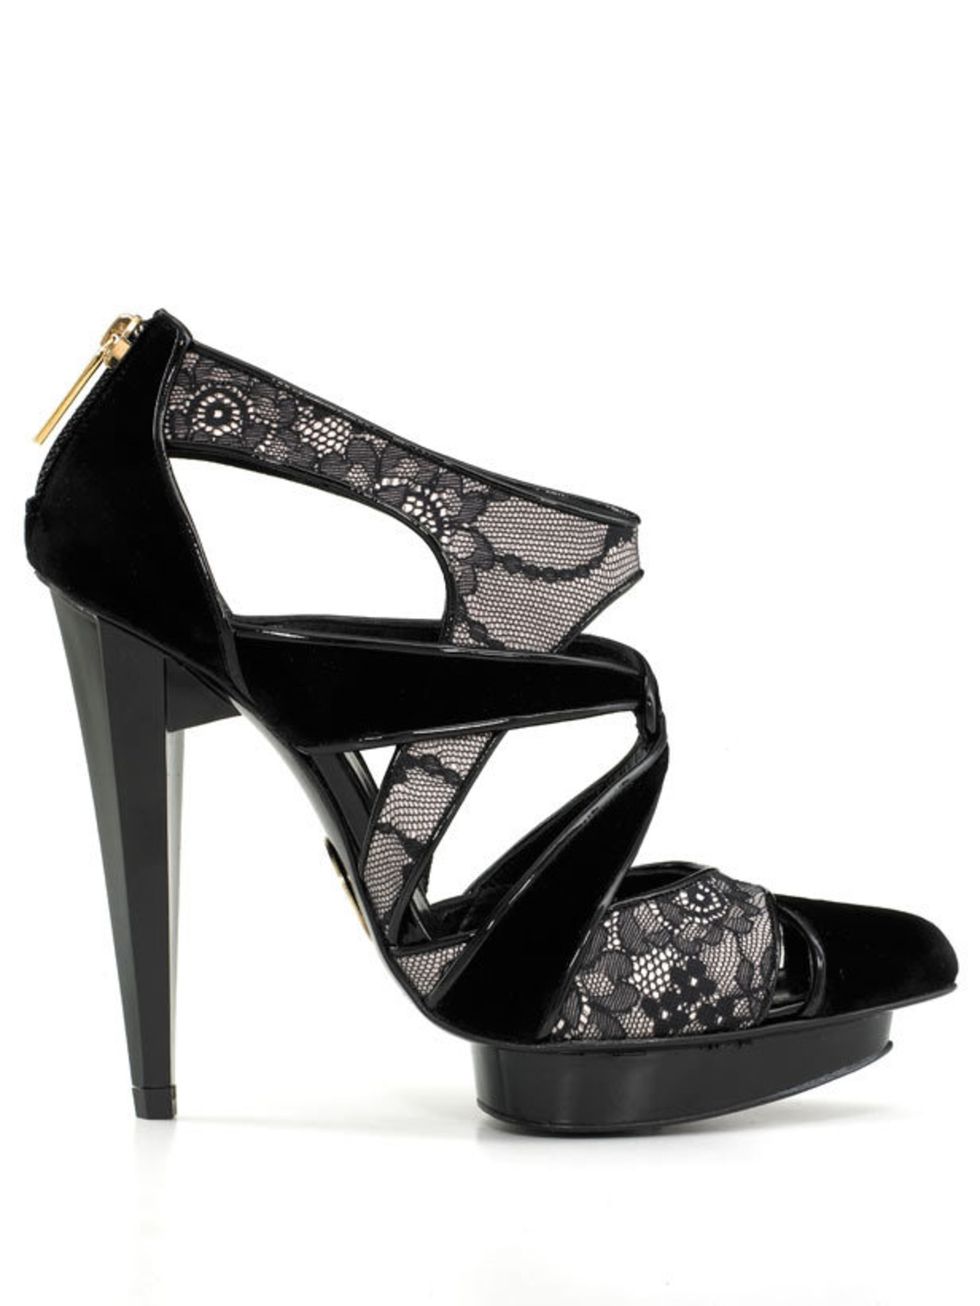 <p><a href="http://www.larabohinc.com/index.php/shoes-1/kinetic-manifesto-shoe-boot-black-lace-velvet-patent.html">Lara Bohinc</a> blace lace &amp; velvet shoe boot, £560</p>